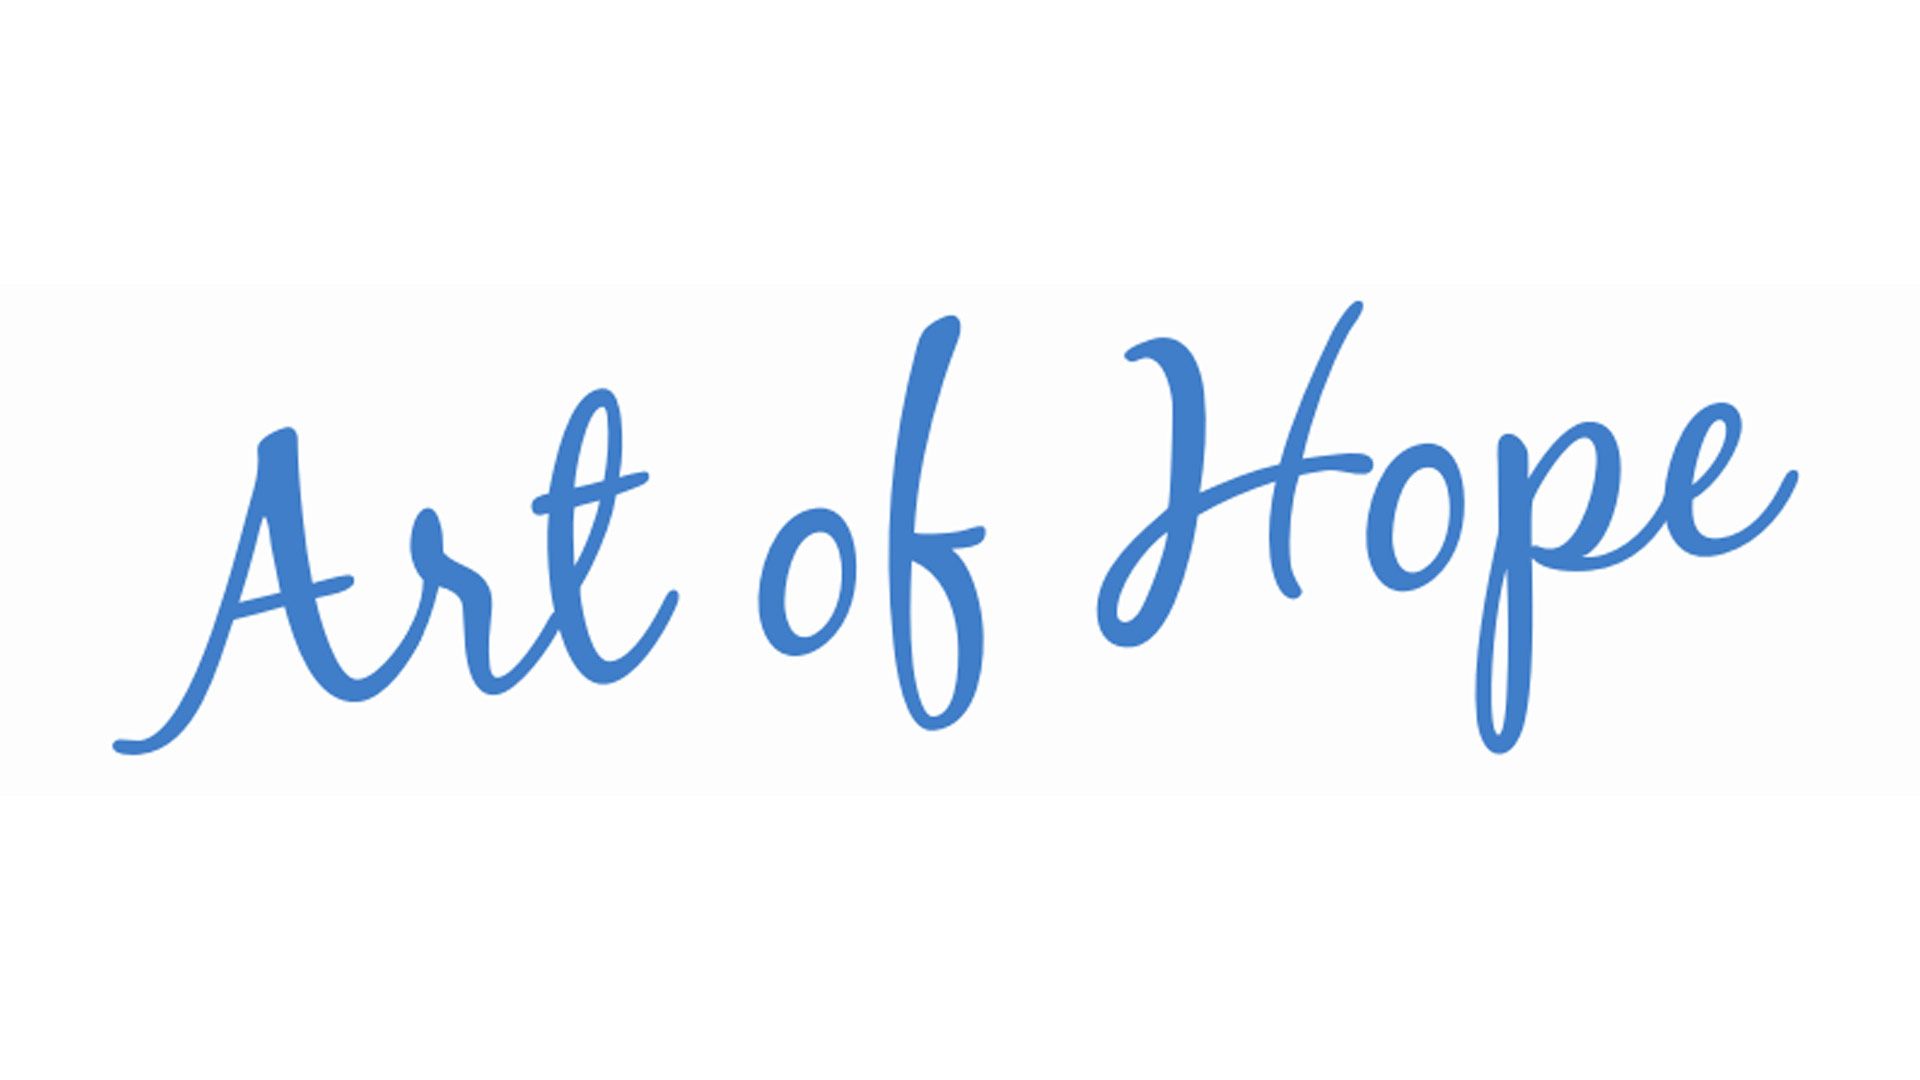 The Art of Hope Annual Calendar